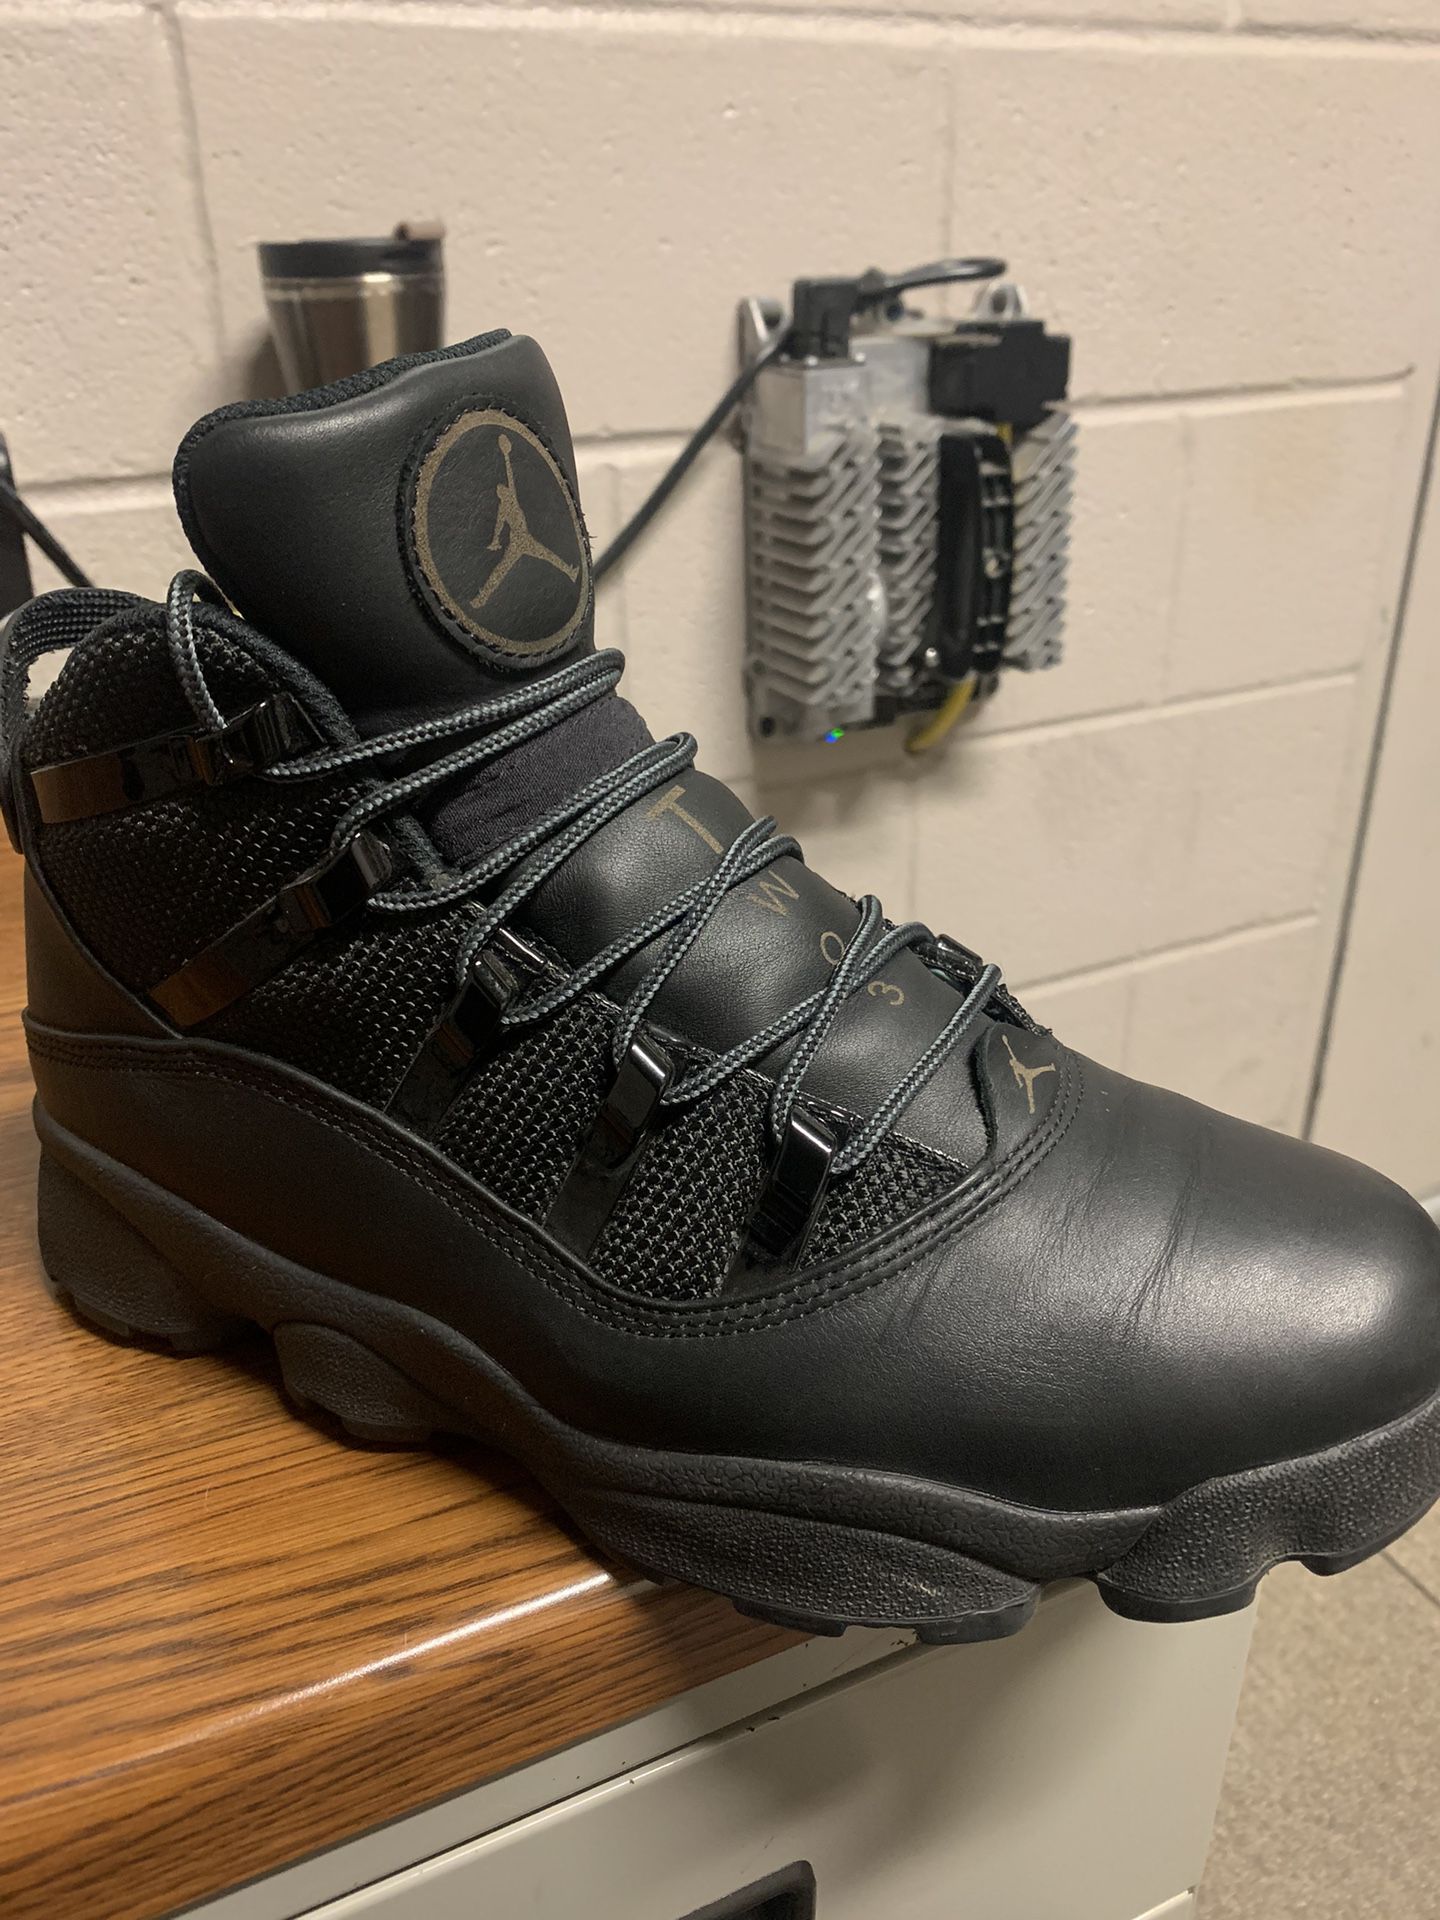 Jordan 6 Rings work shoes/boots